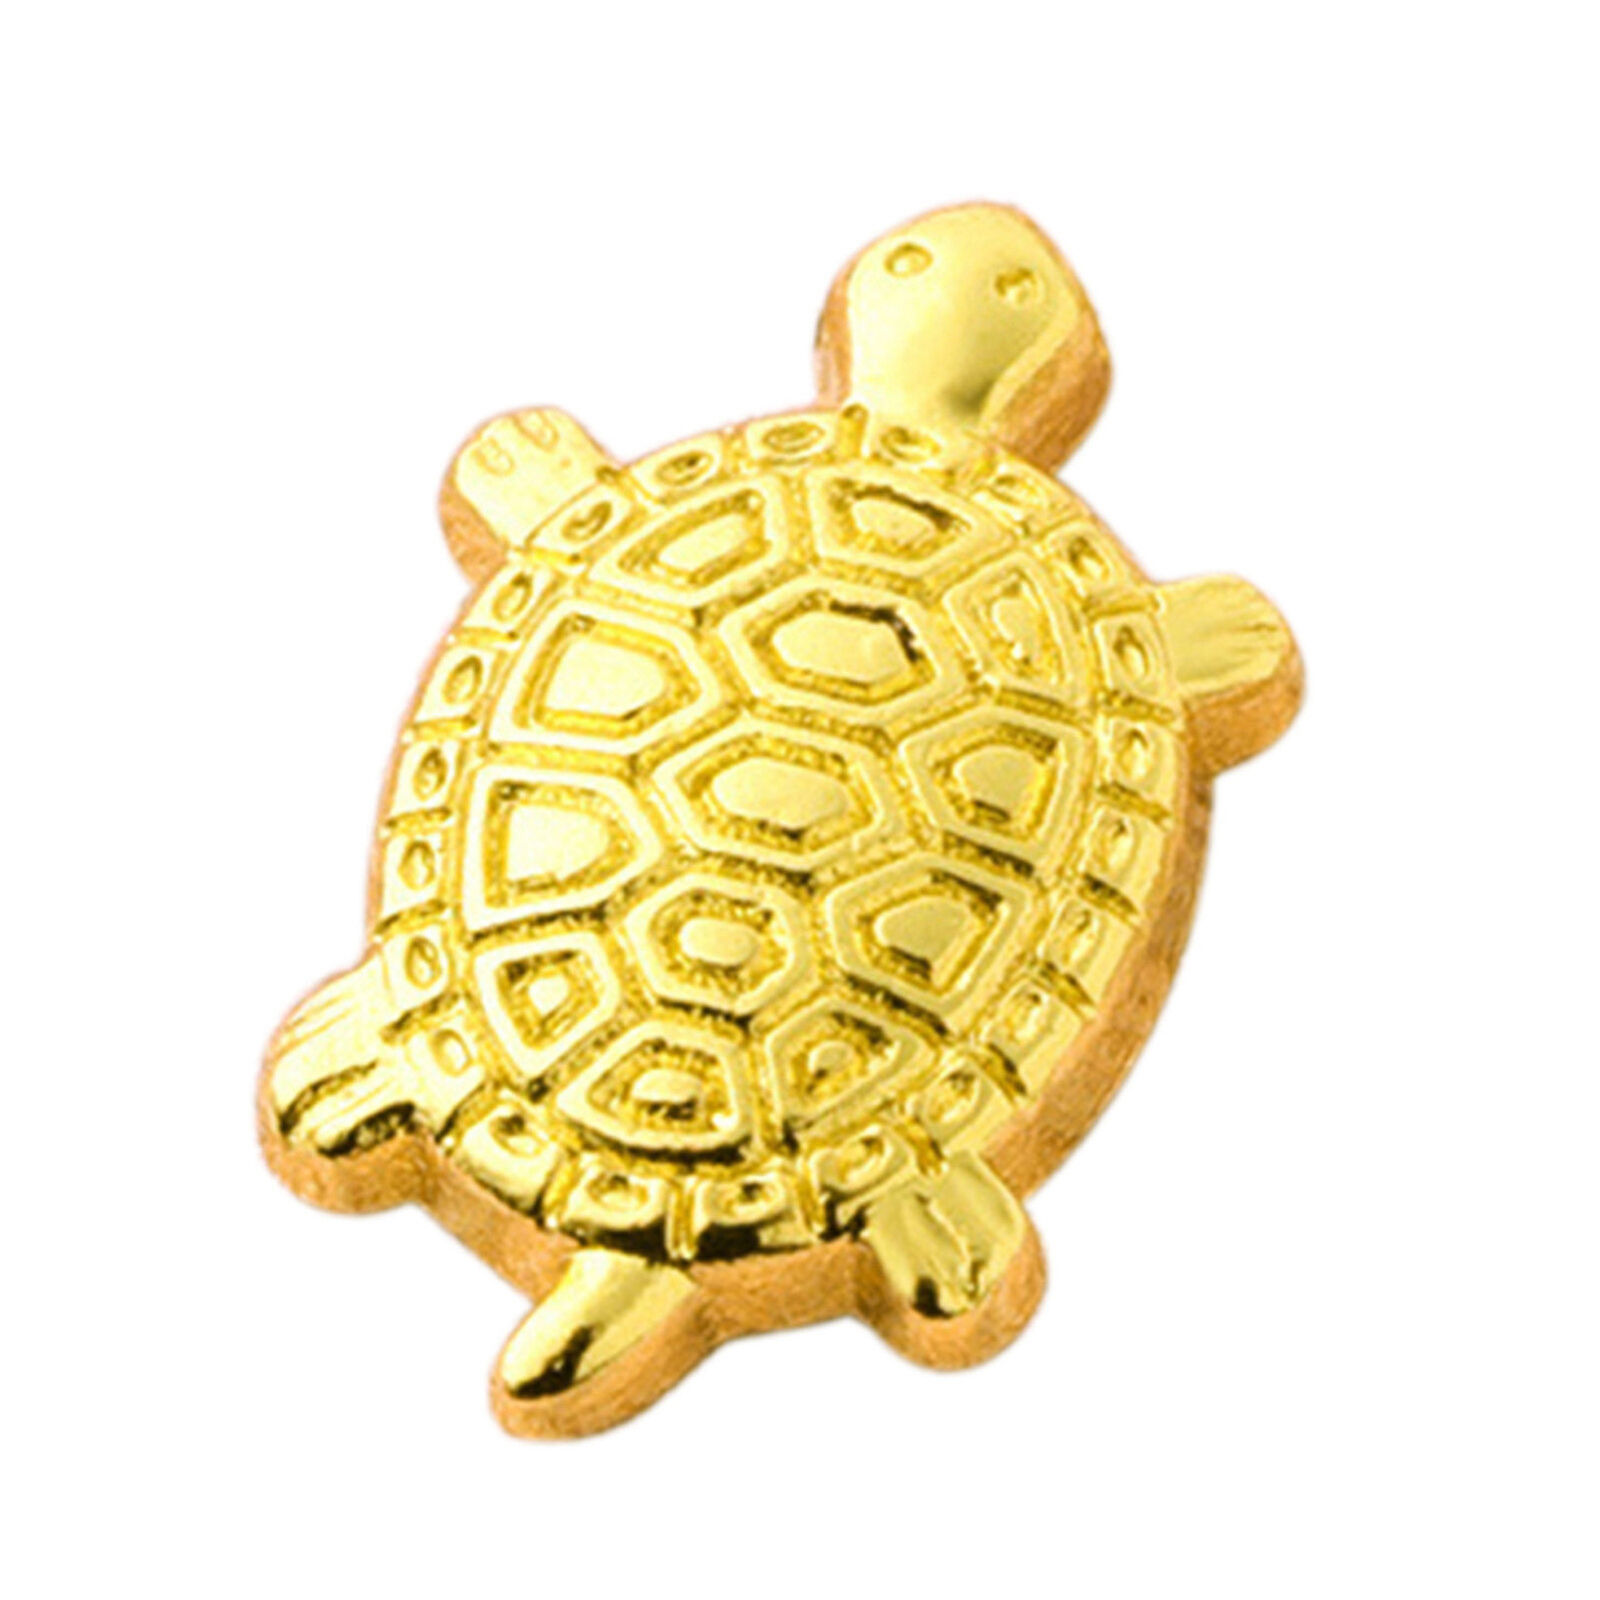 Miniature Alloy Golden Money Turtle Statue Figurine Lucky Tortoise Wealth Luck